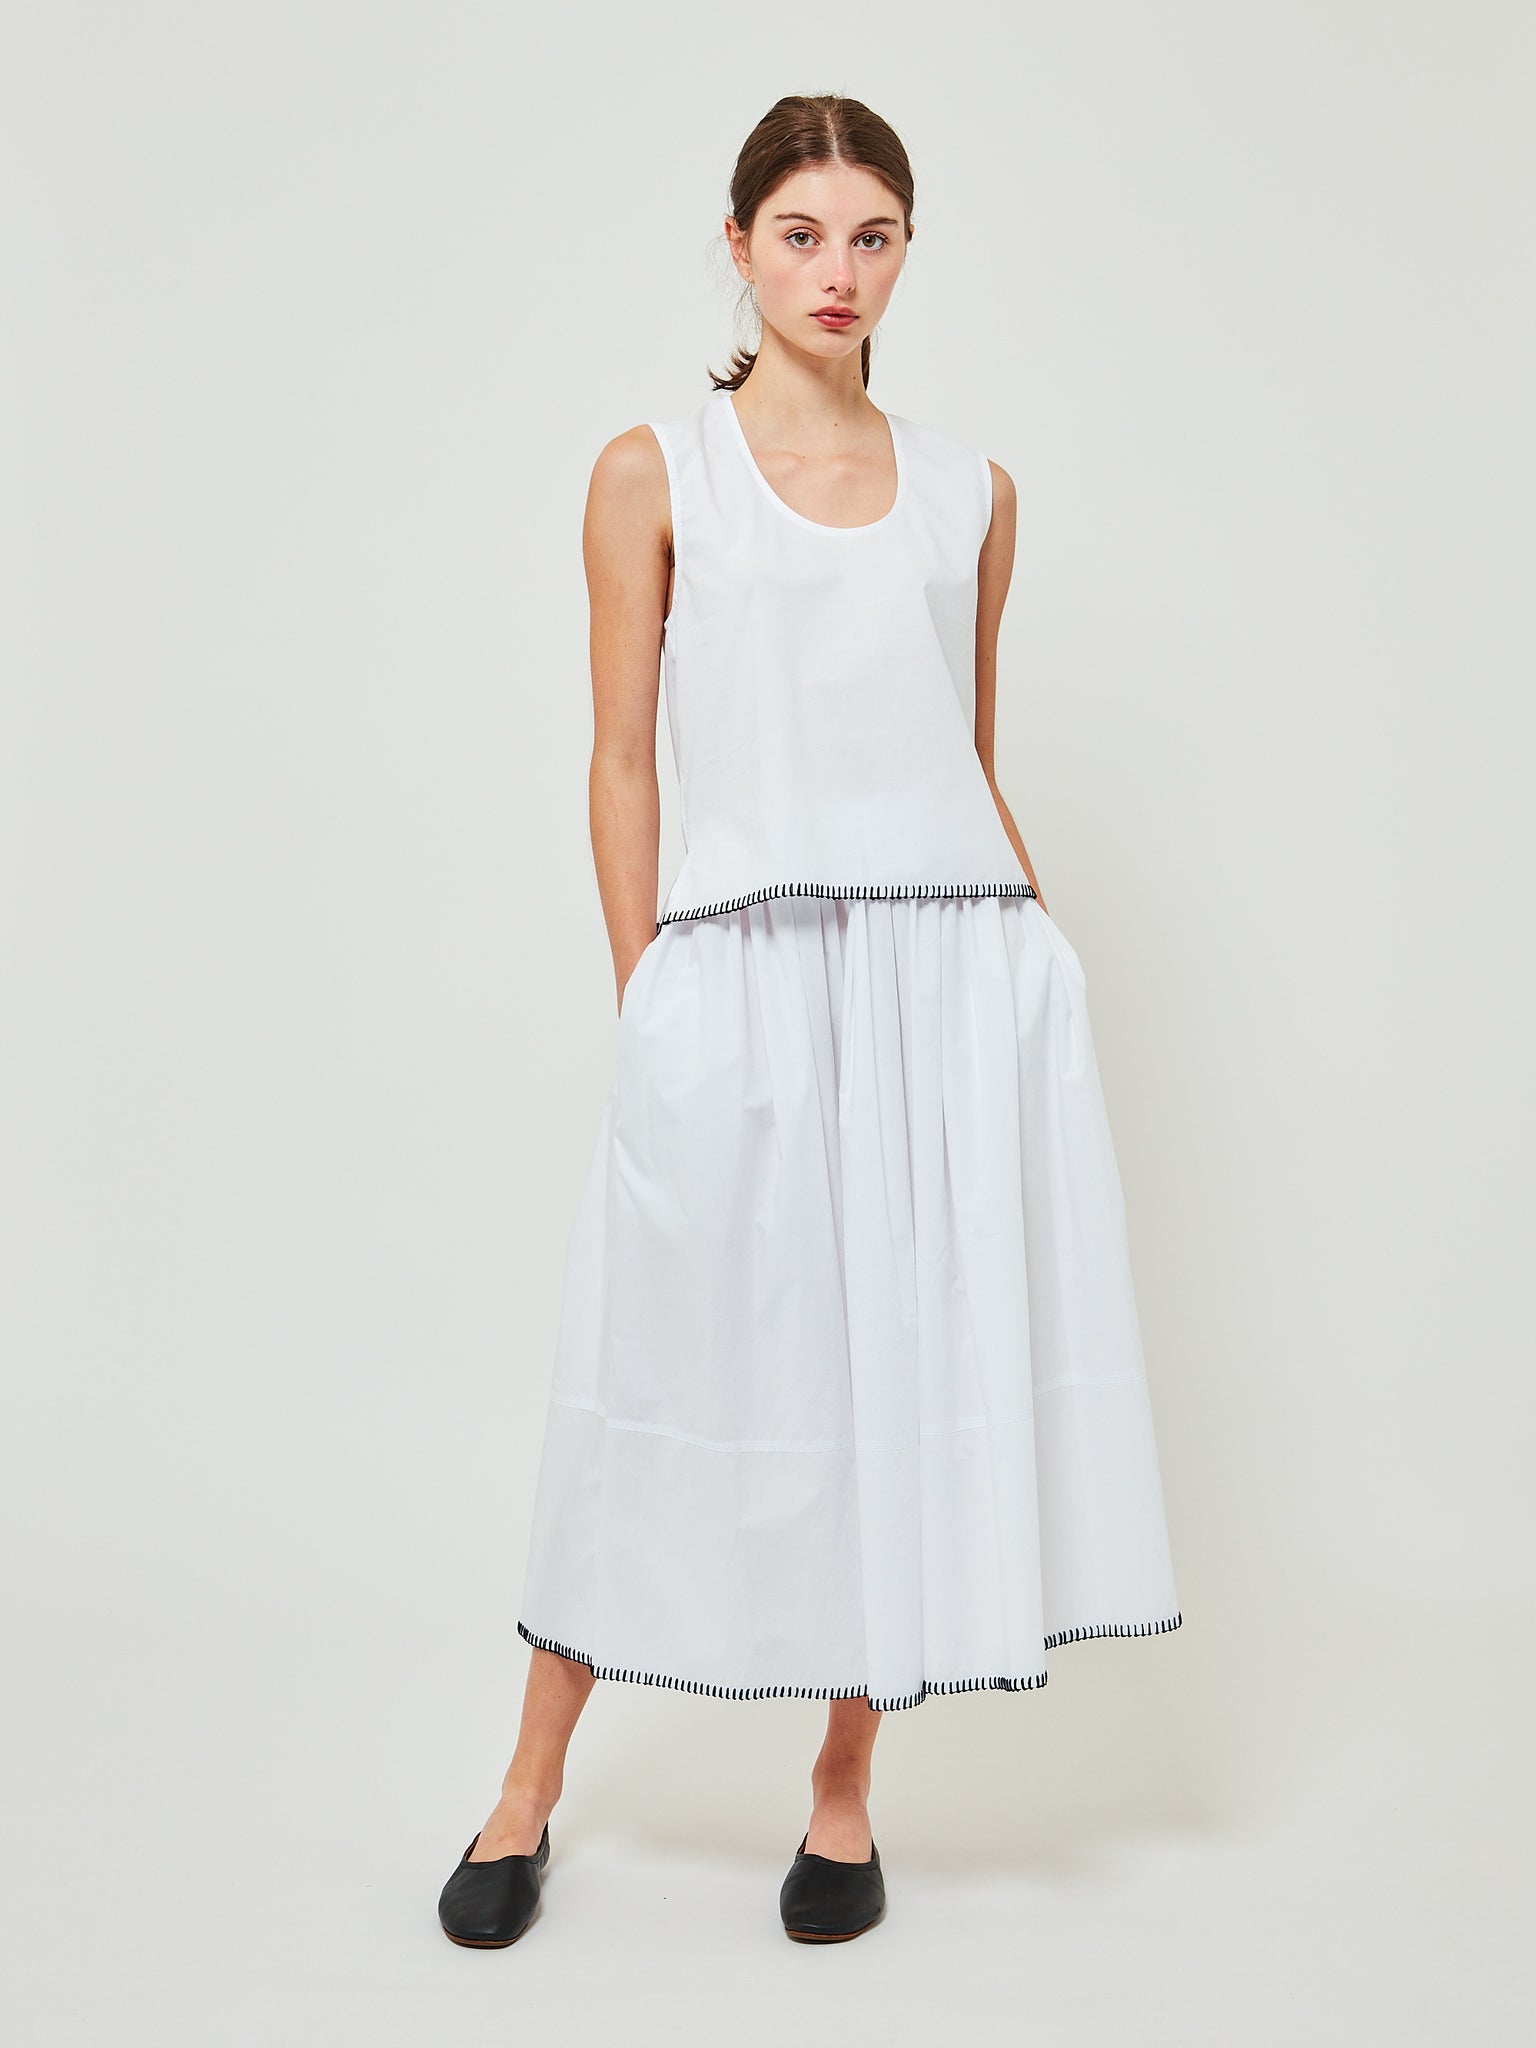 Gathered Skirt Optical White Embroidered